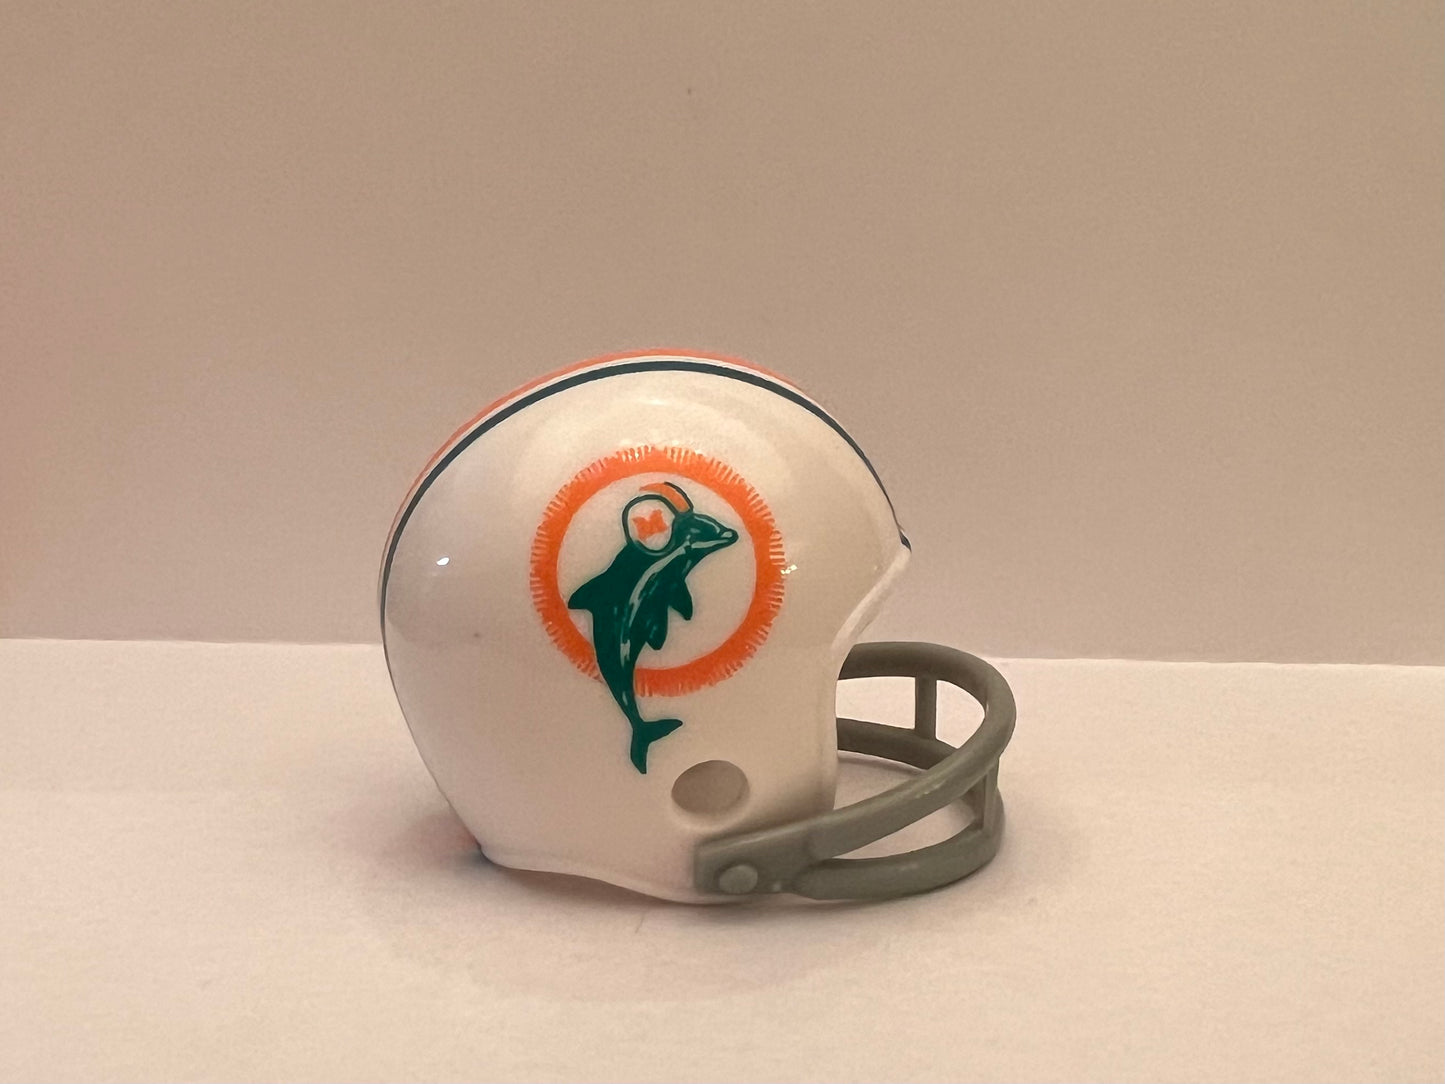 Miami Dolphins Riddell NFL 2-Bar Pocket Pro Helmet 1966 Throwback (Dolphin through hoop)  WESTBROOKSPORTSCARDS   